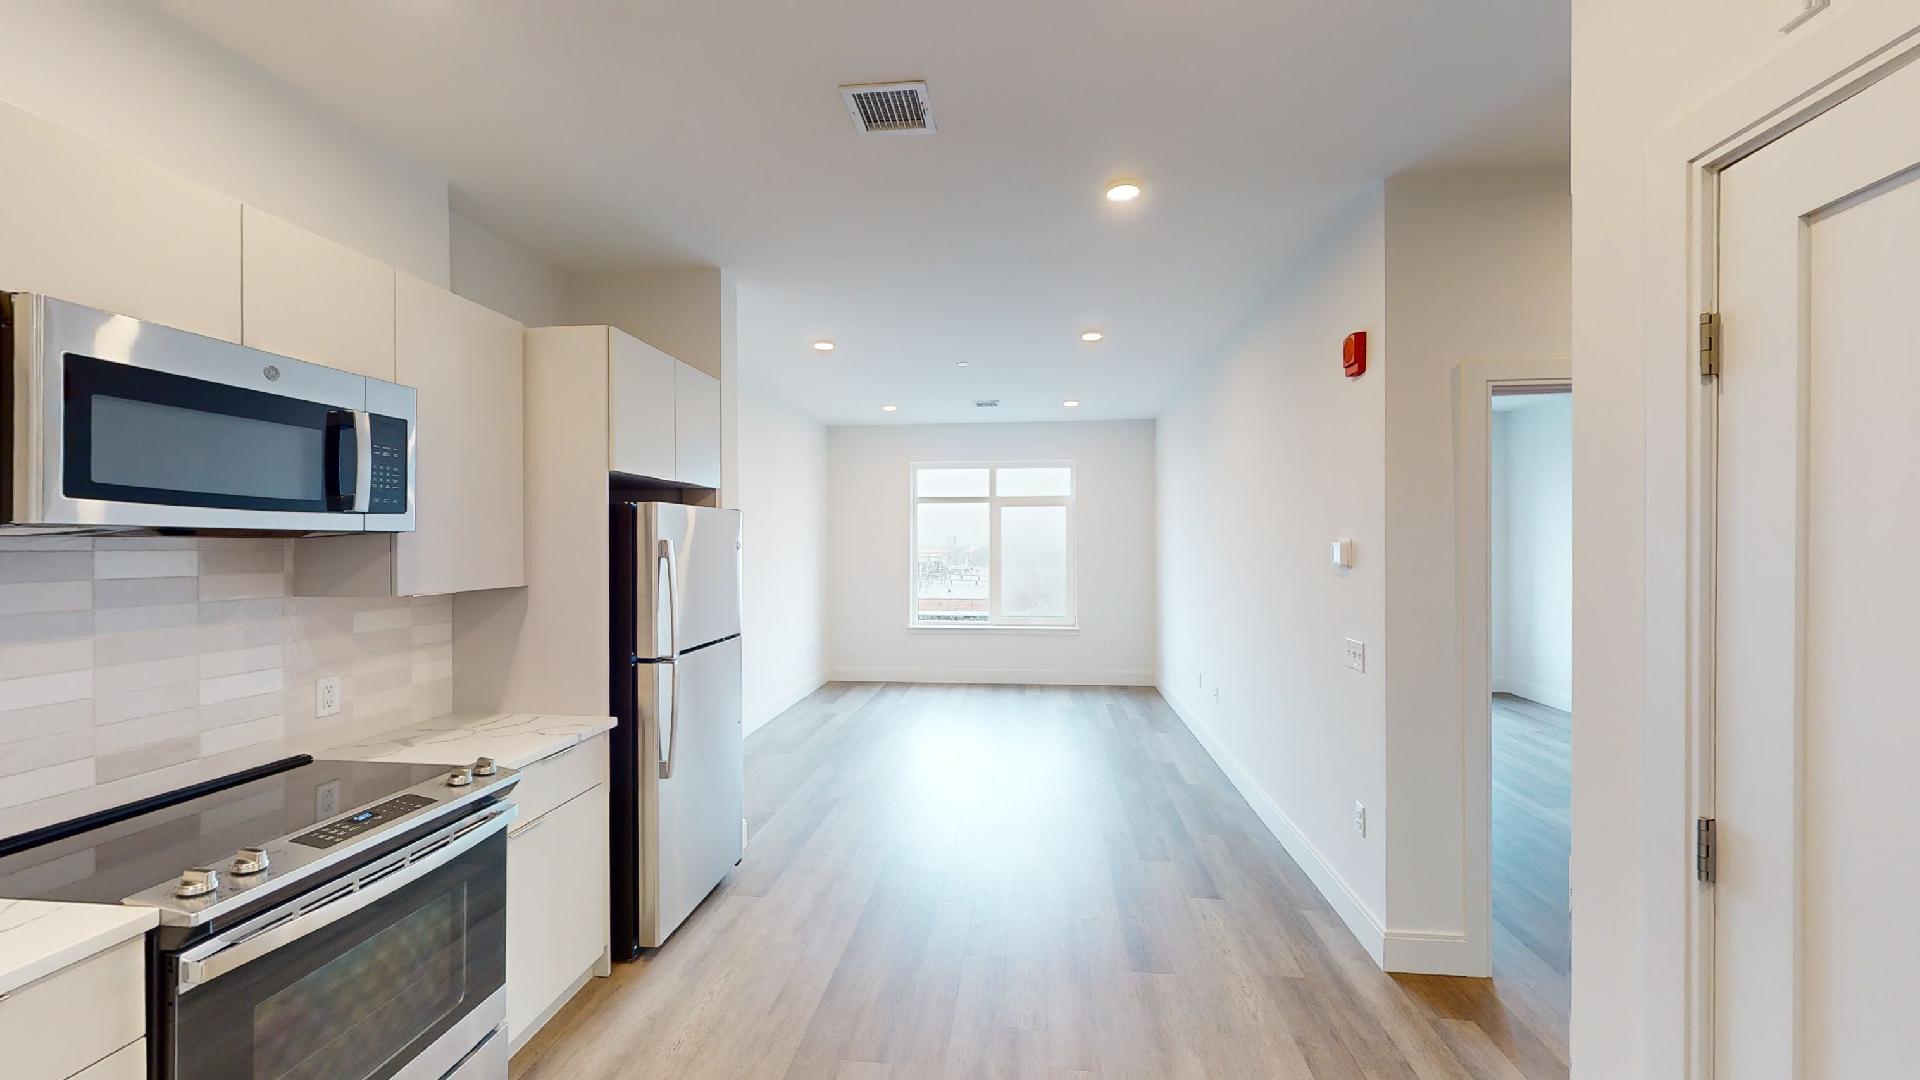 Photos of apartment on Savin Hill Ave.,Boston MA 02125